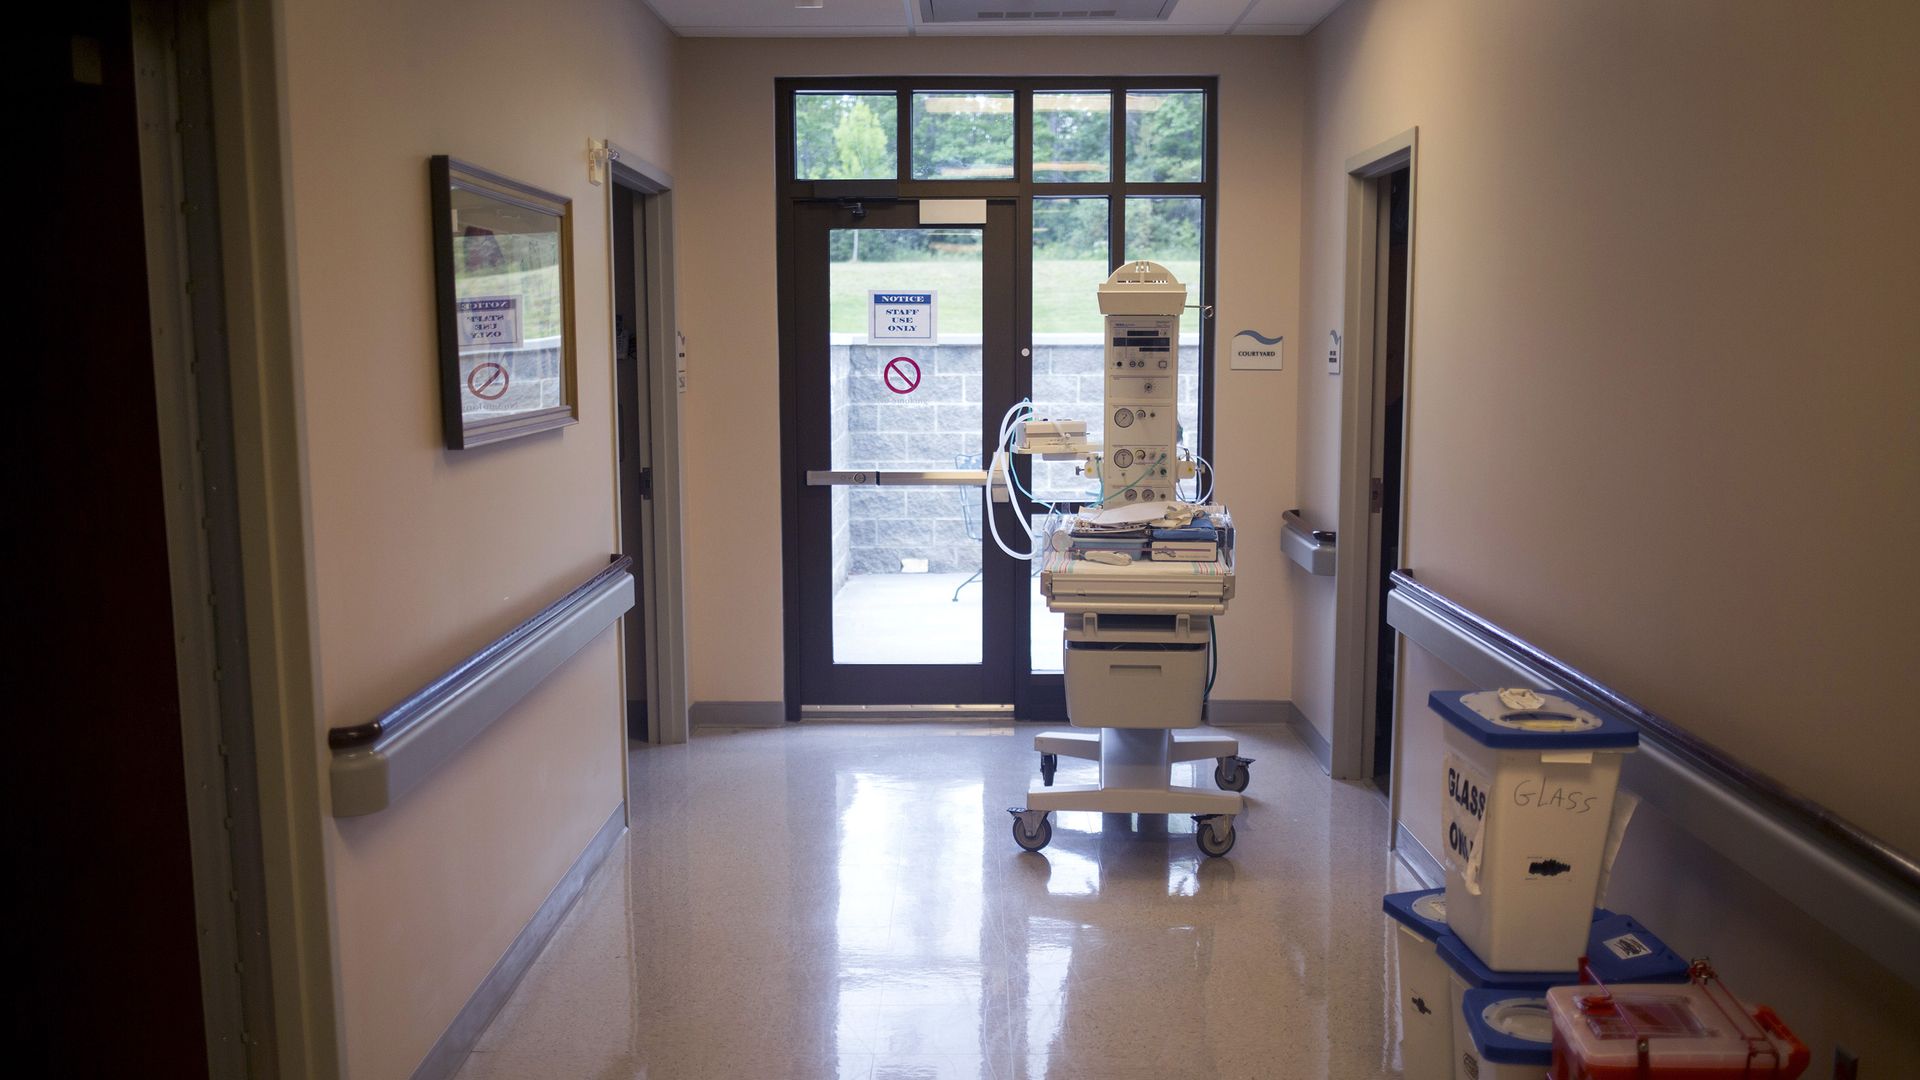 A hospital hallway with machines.